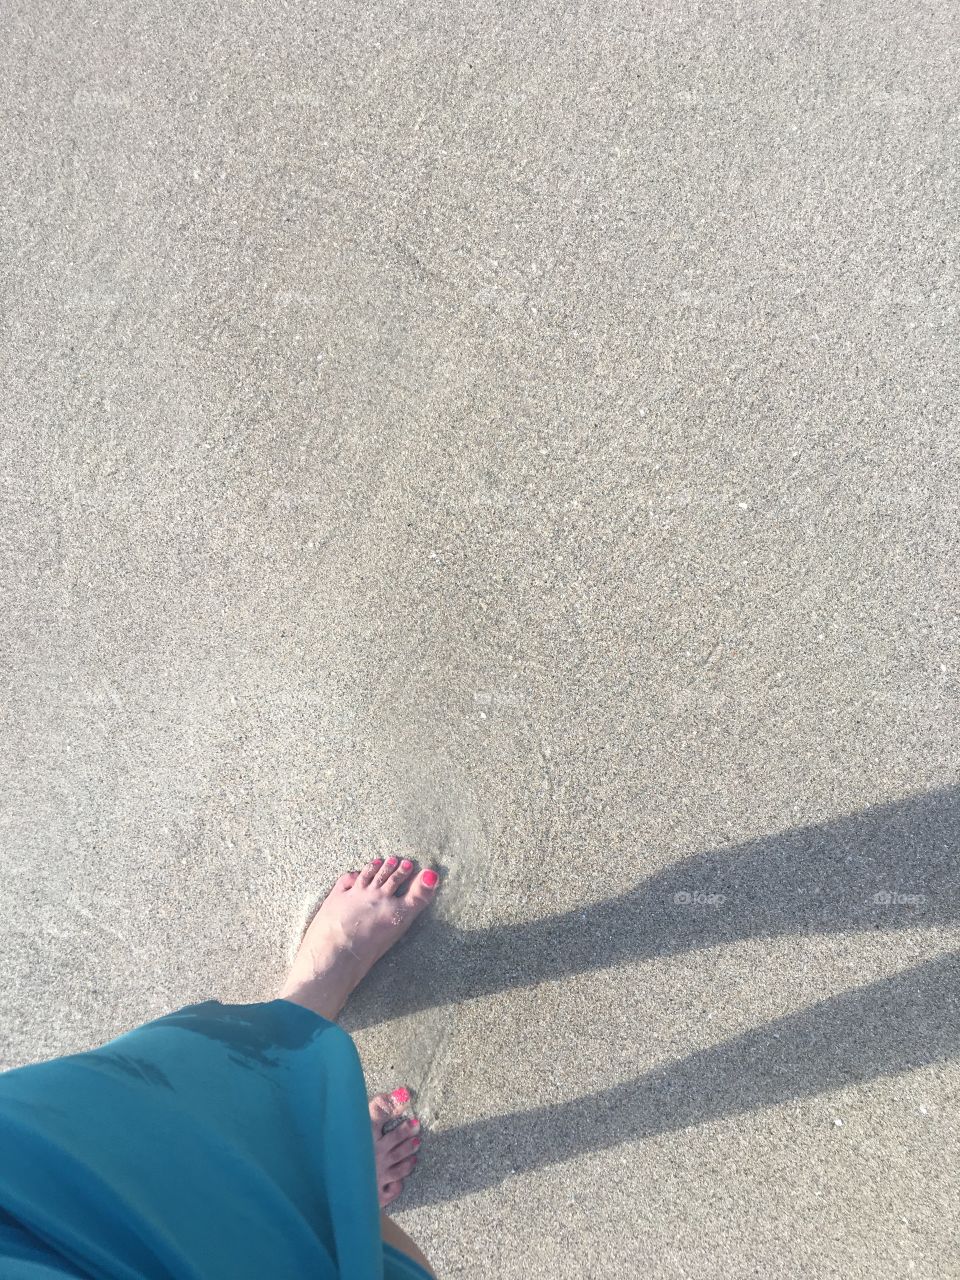 Walking on a sandy beach 